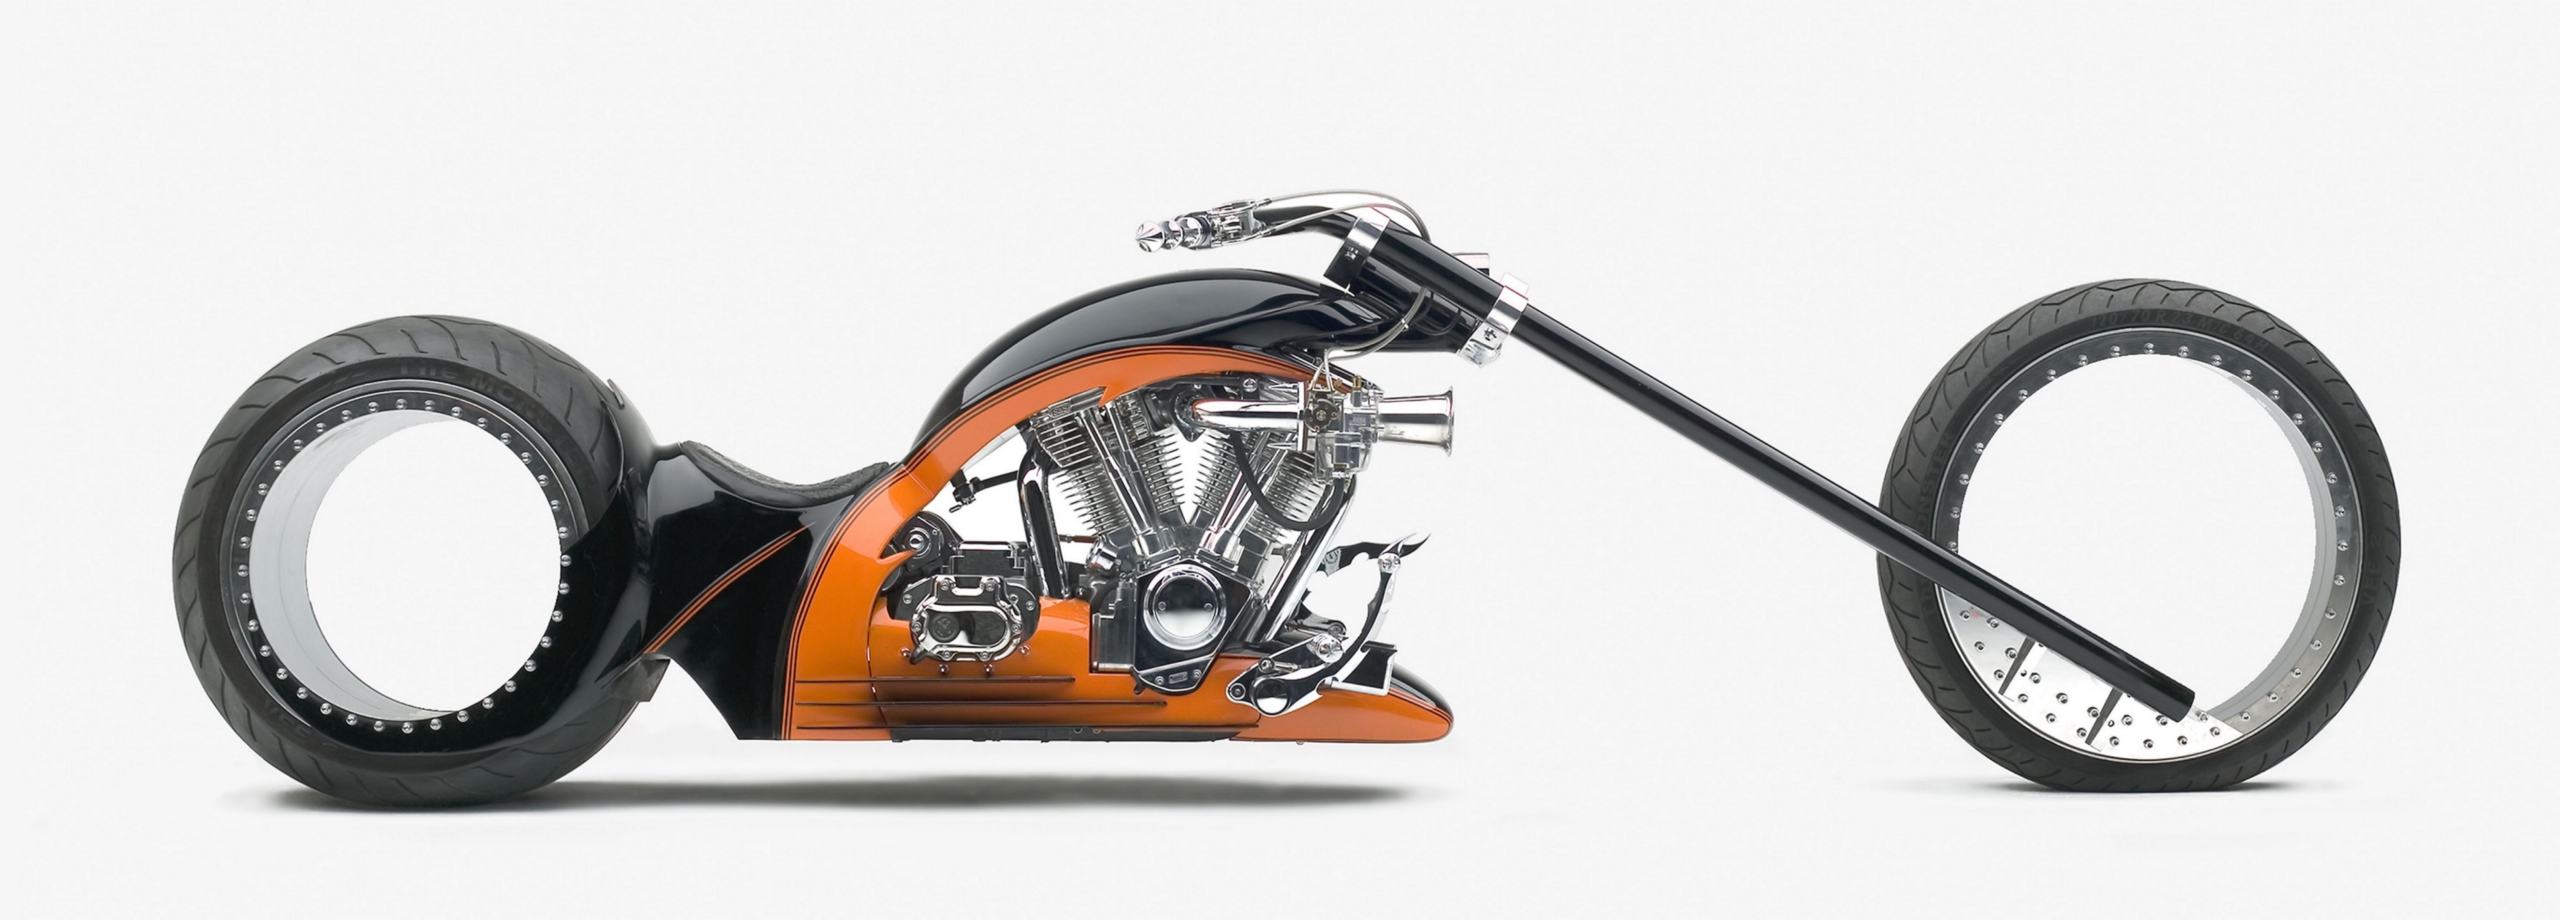 Chopper Motorcycle Metal Art Bike Display. 13 X 6. Good enough to get on  ride.